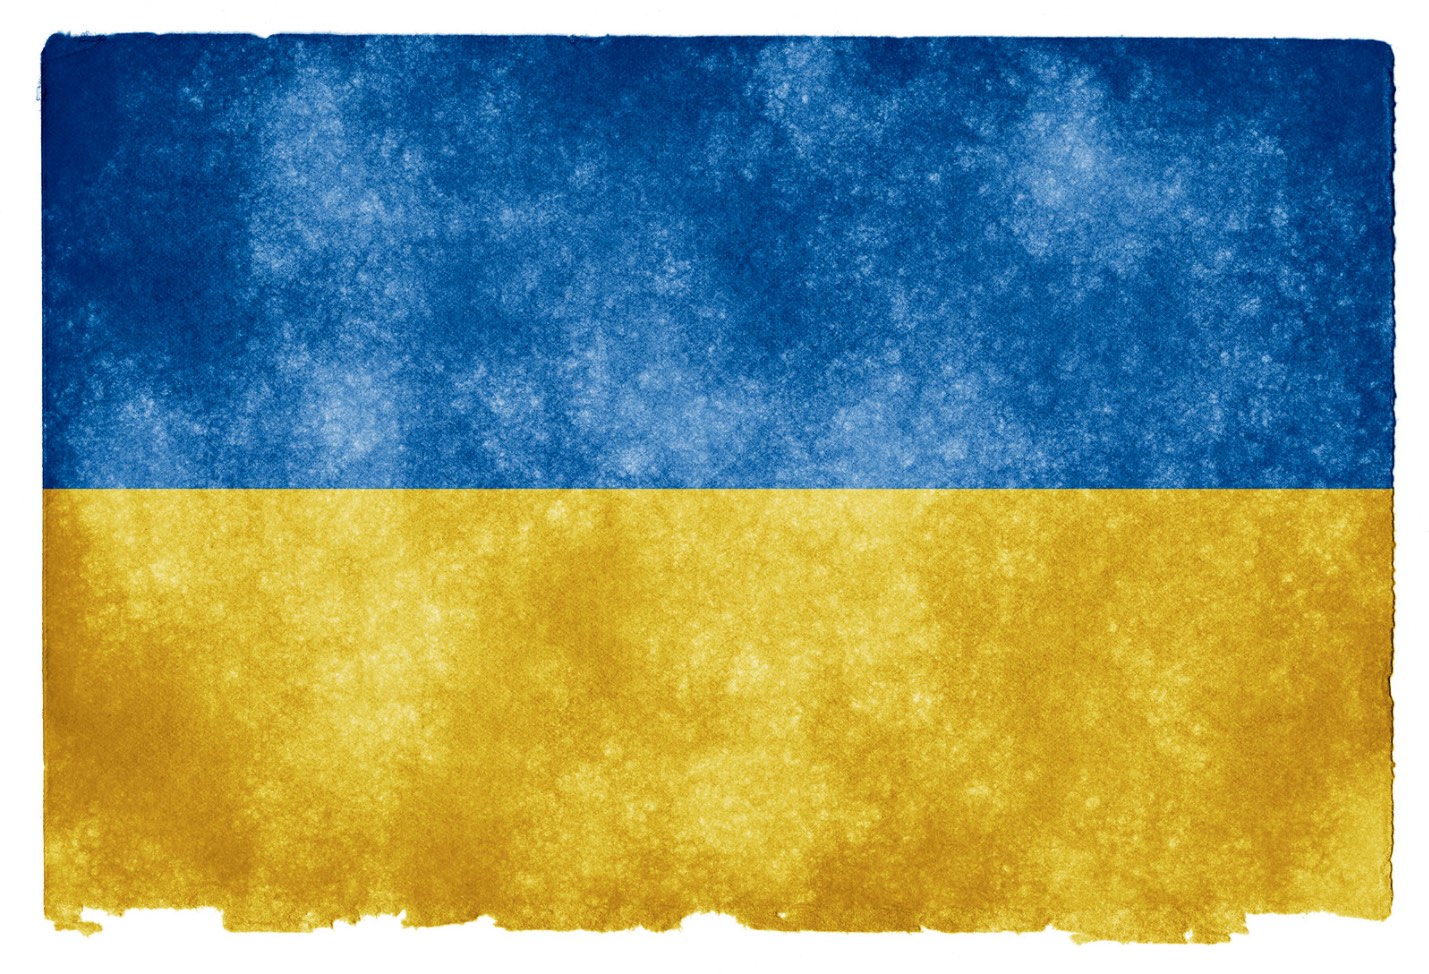 Ukraine Flag grunge - Nicolas Raymond, Flickr.